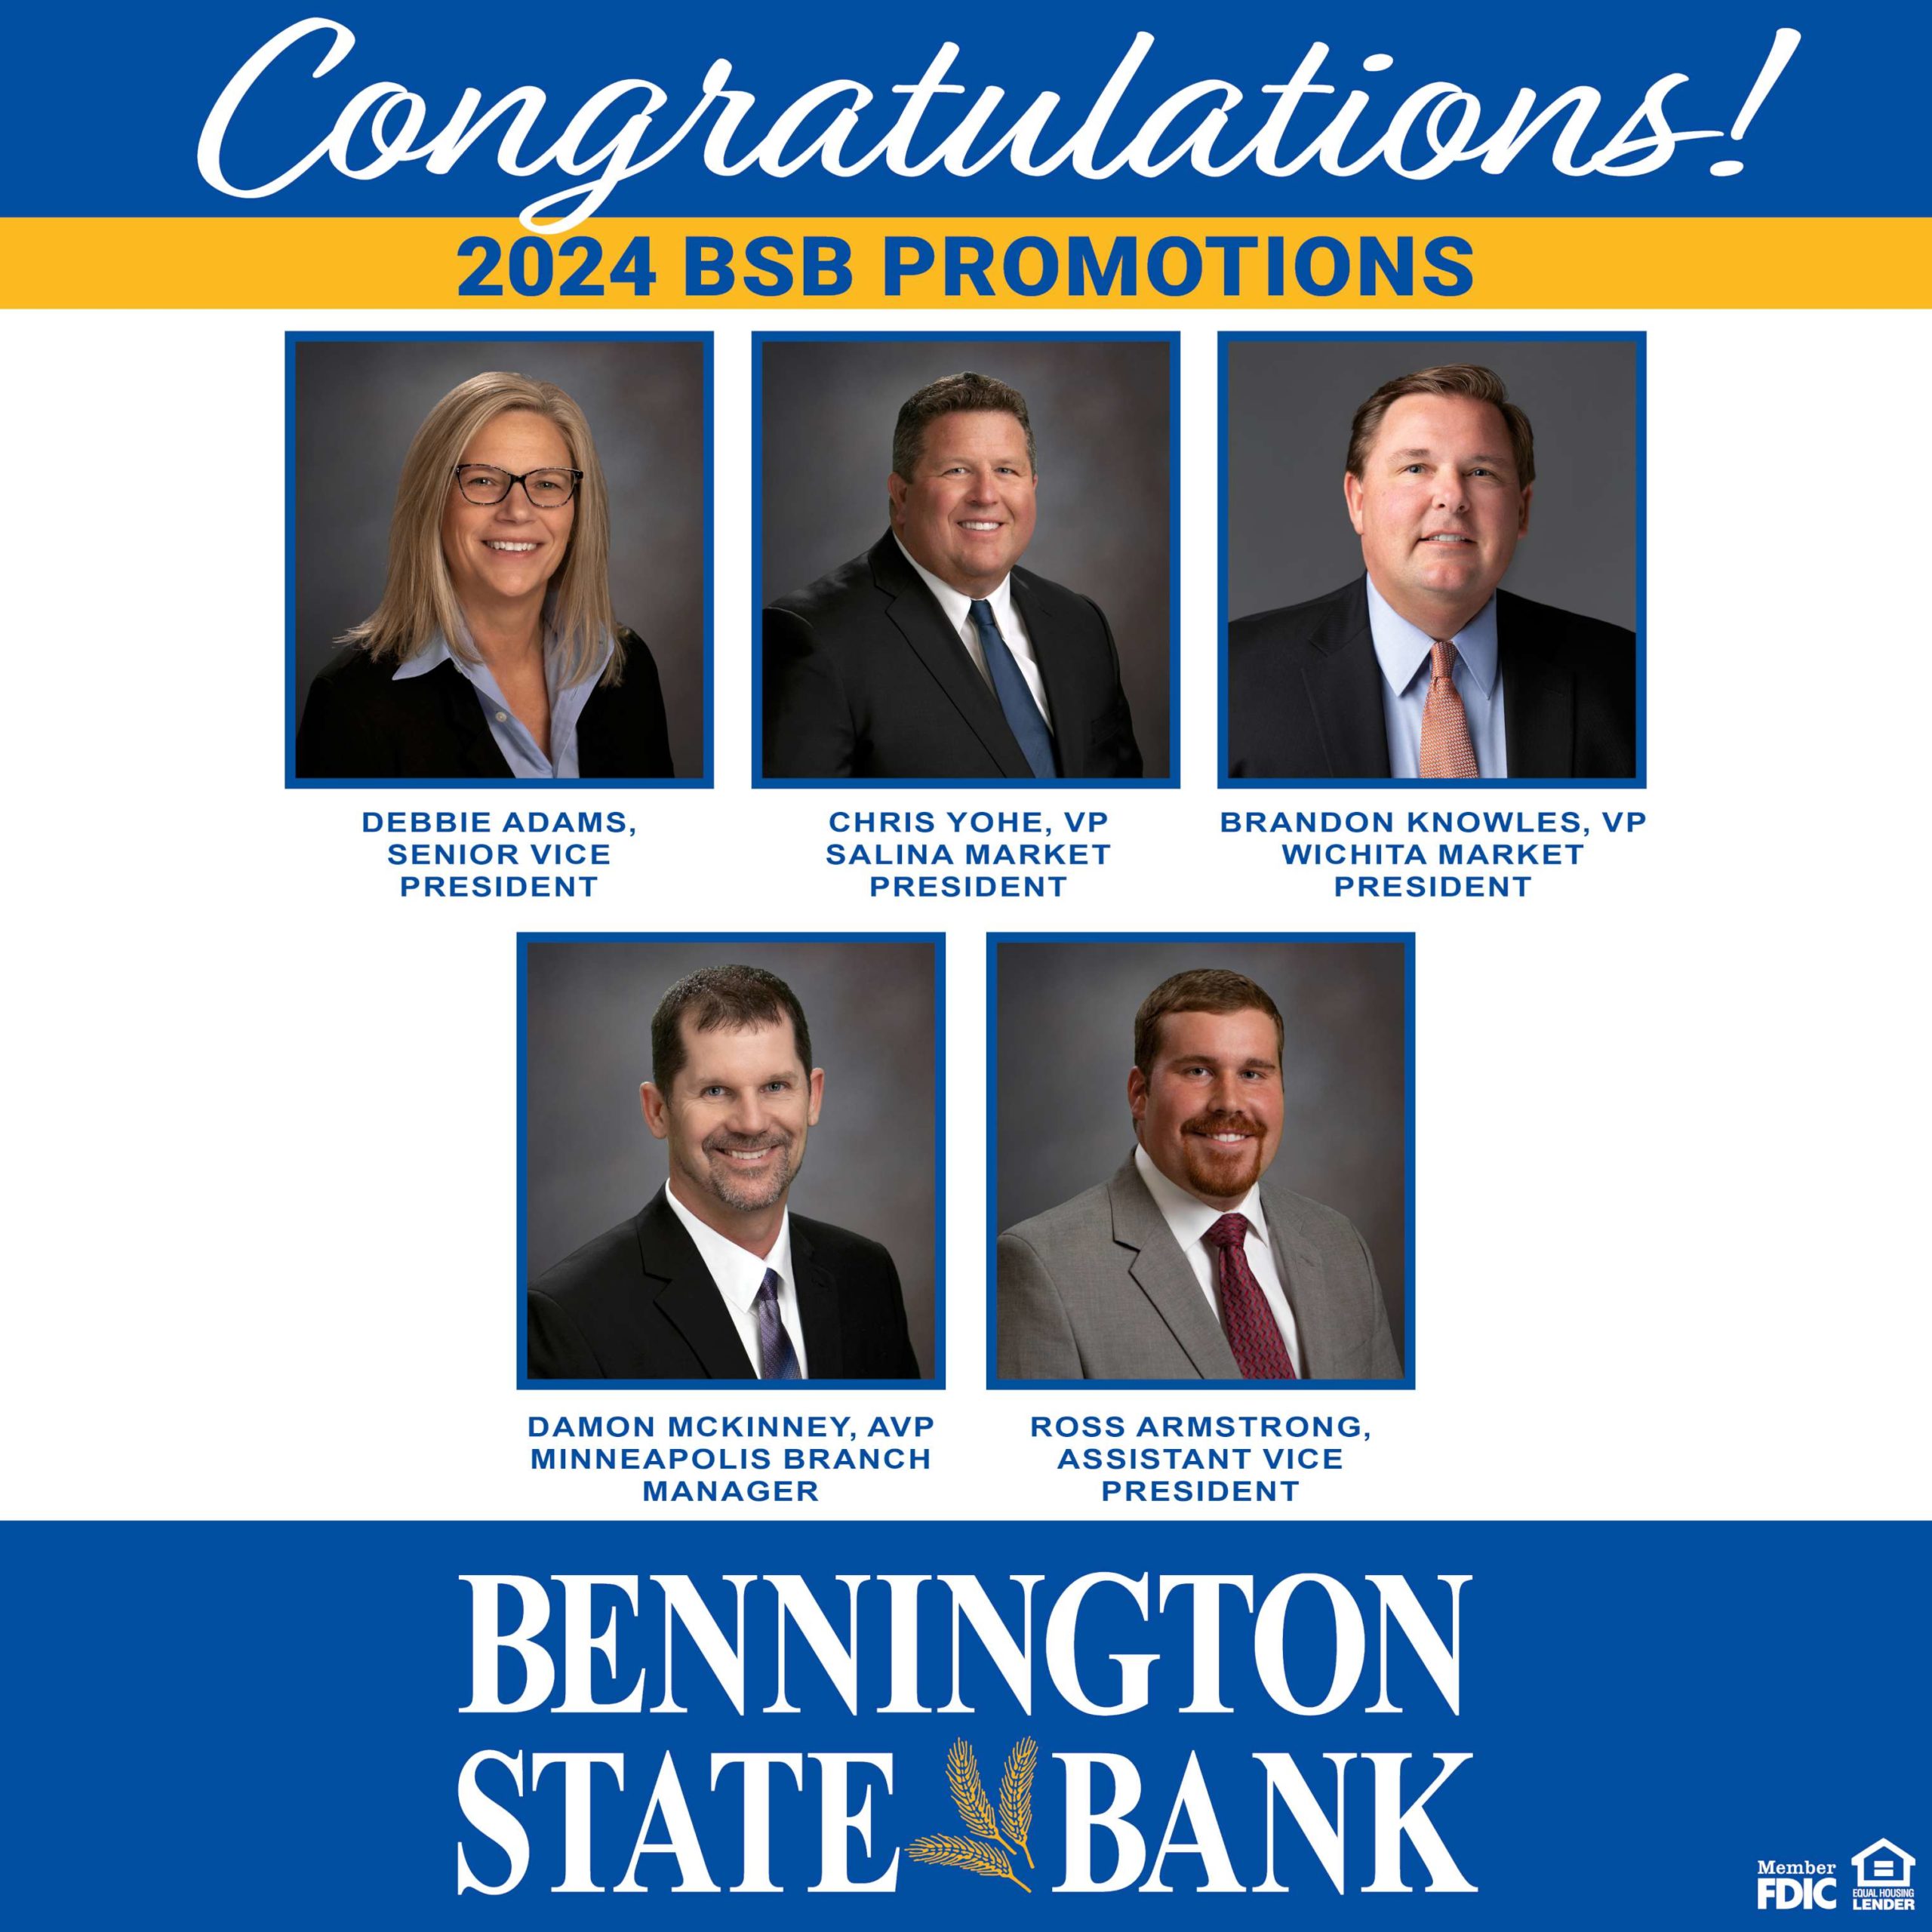 Bennington State Bank promotions 2024